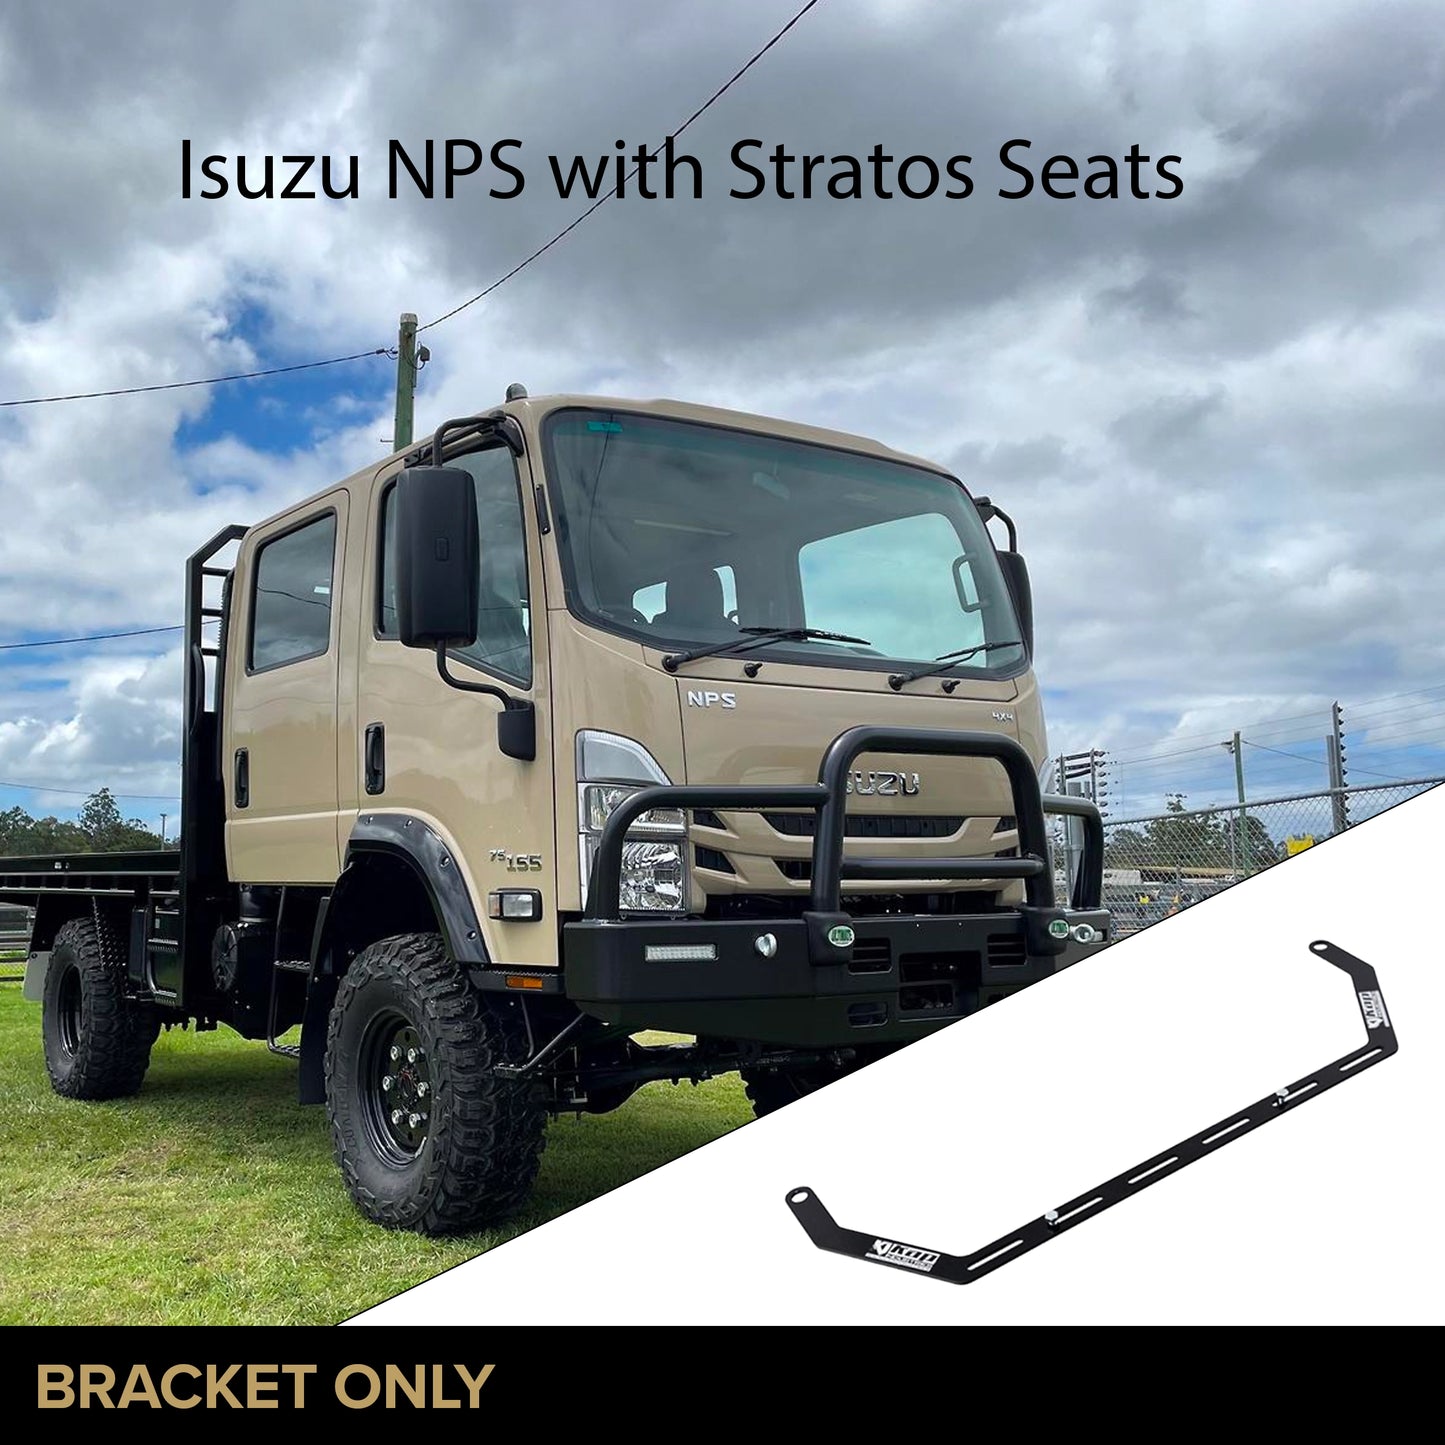 Isuzu NPS with Stratos Seats Fire Extinguisher Bracket